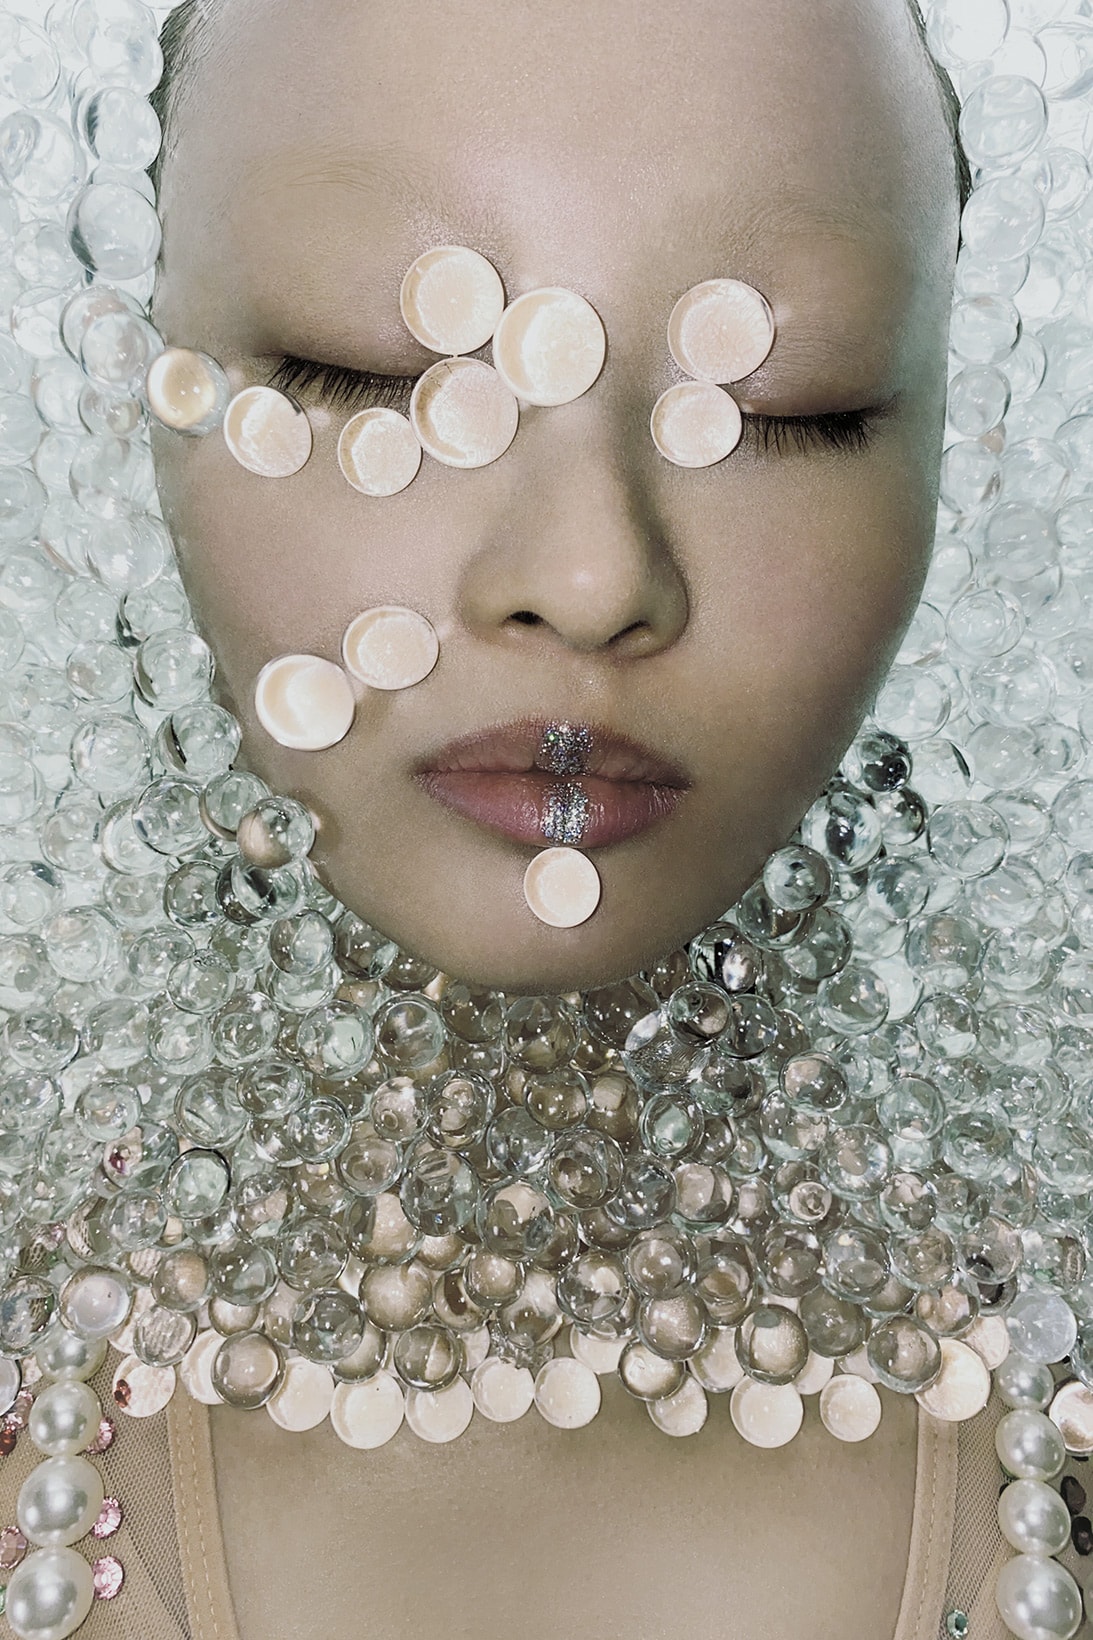 susan fang fall winter 2020 campaign glass beads portrait shot